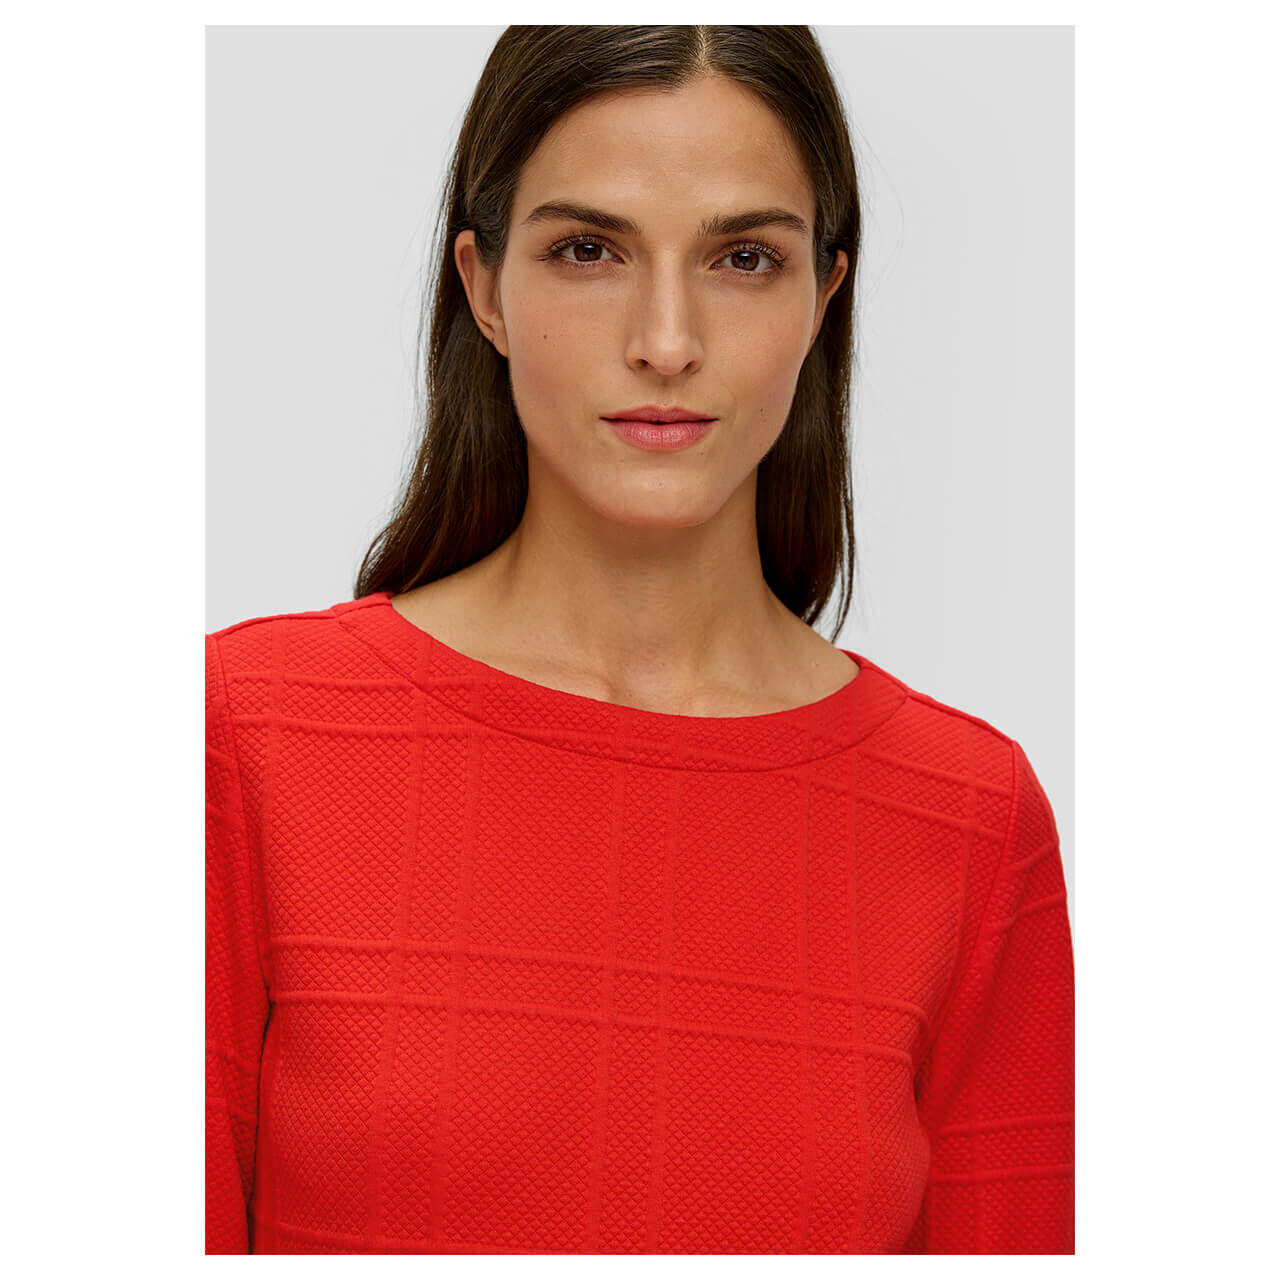 s.Oliver Damen Langarm Kleid red structured